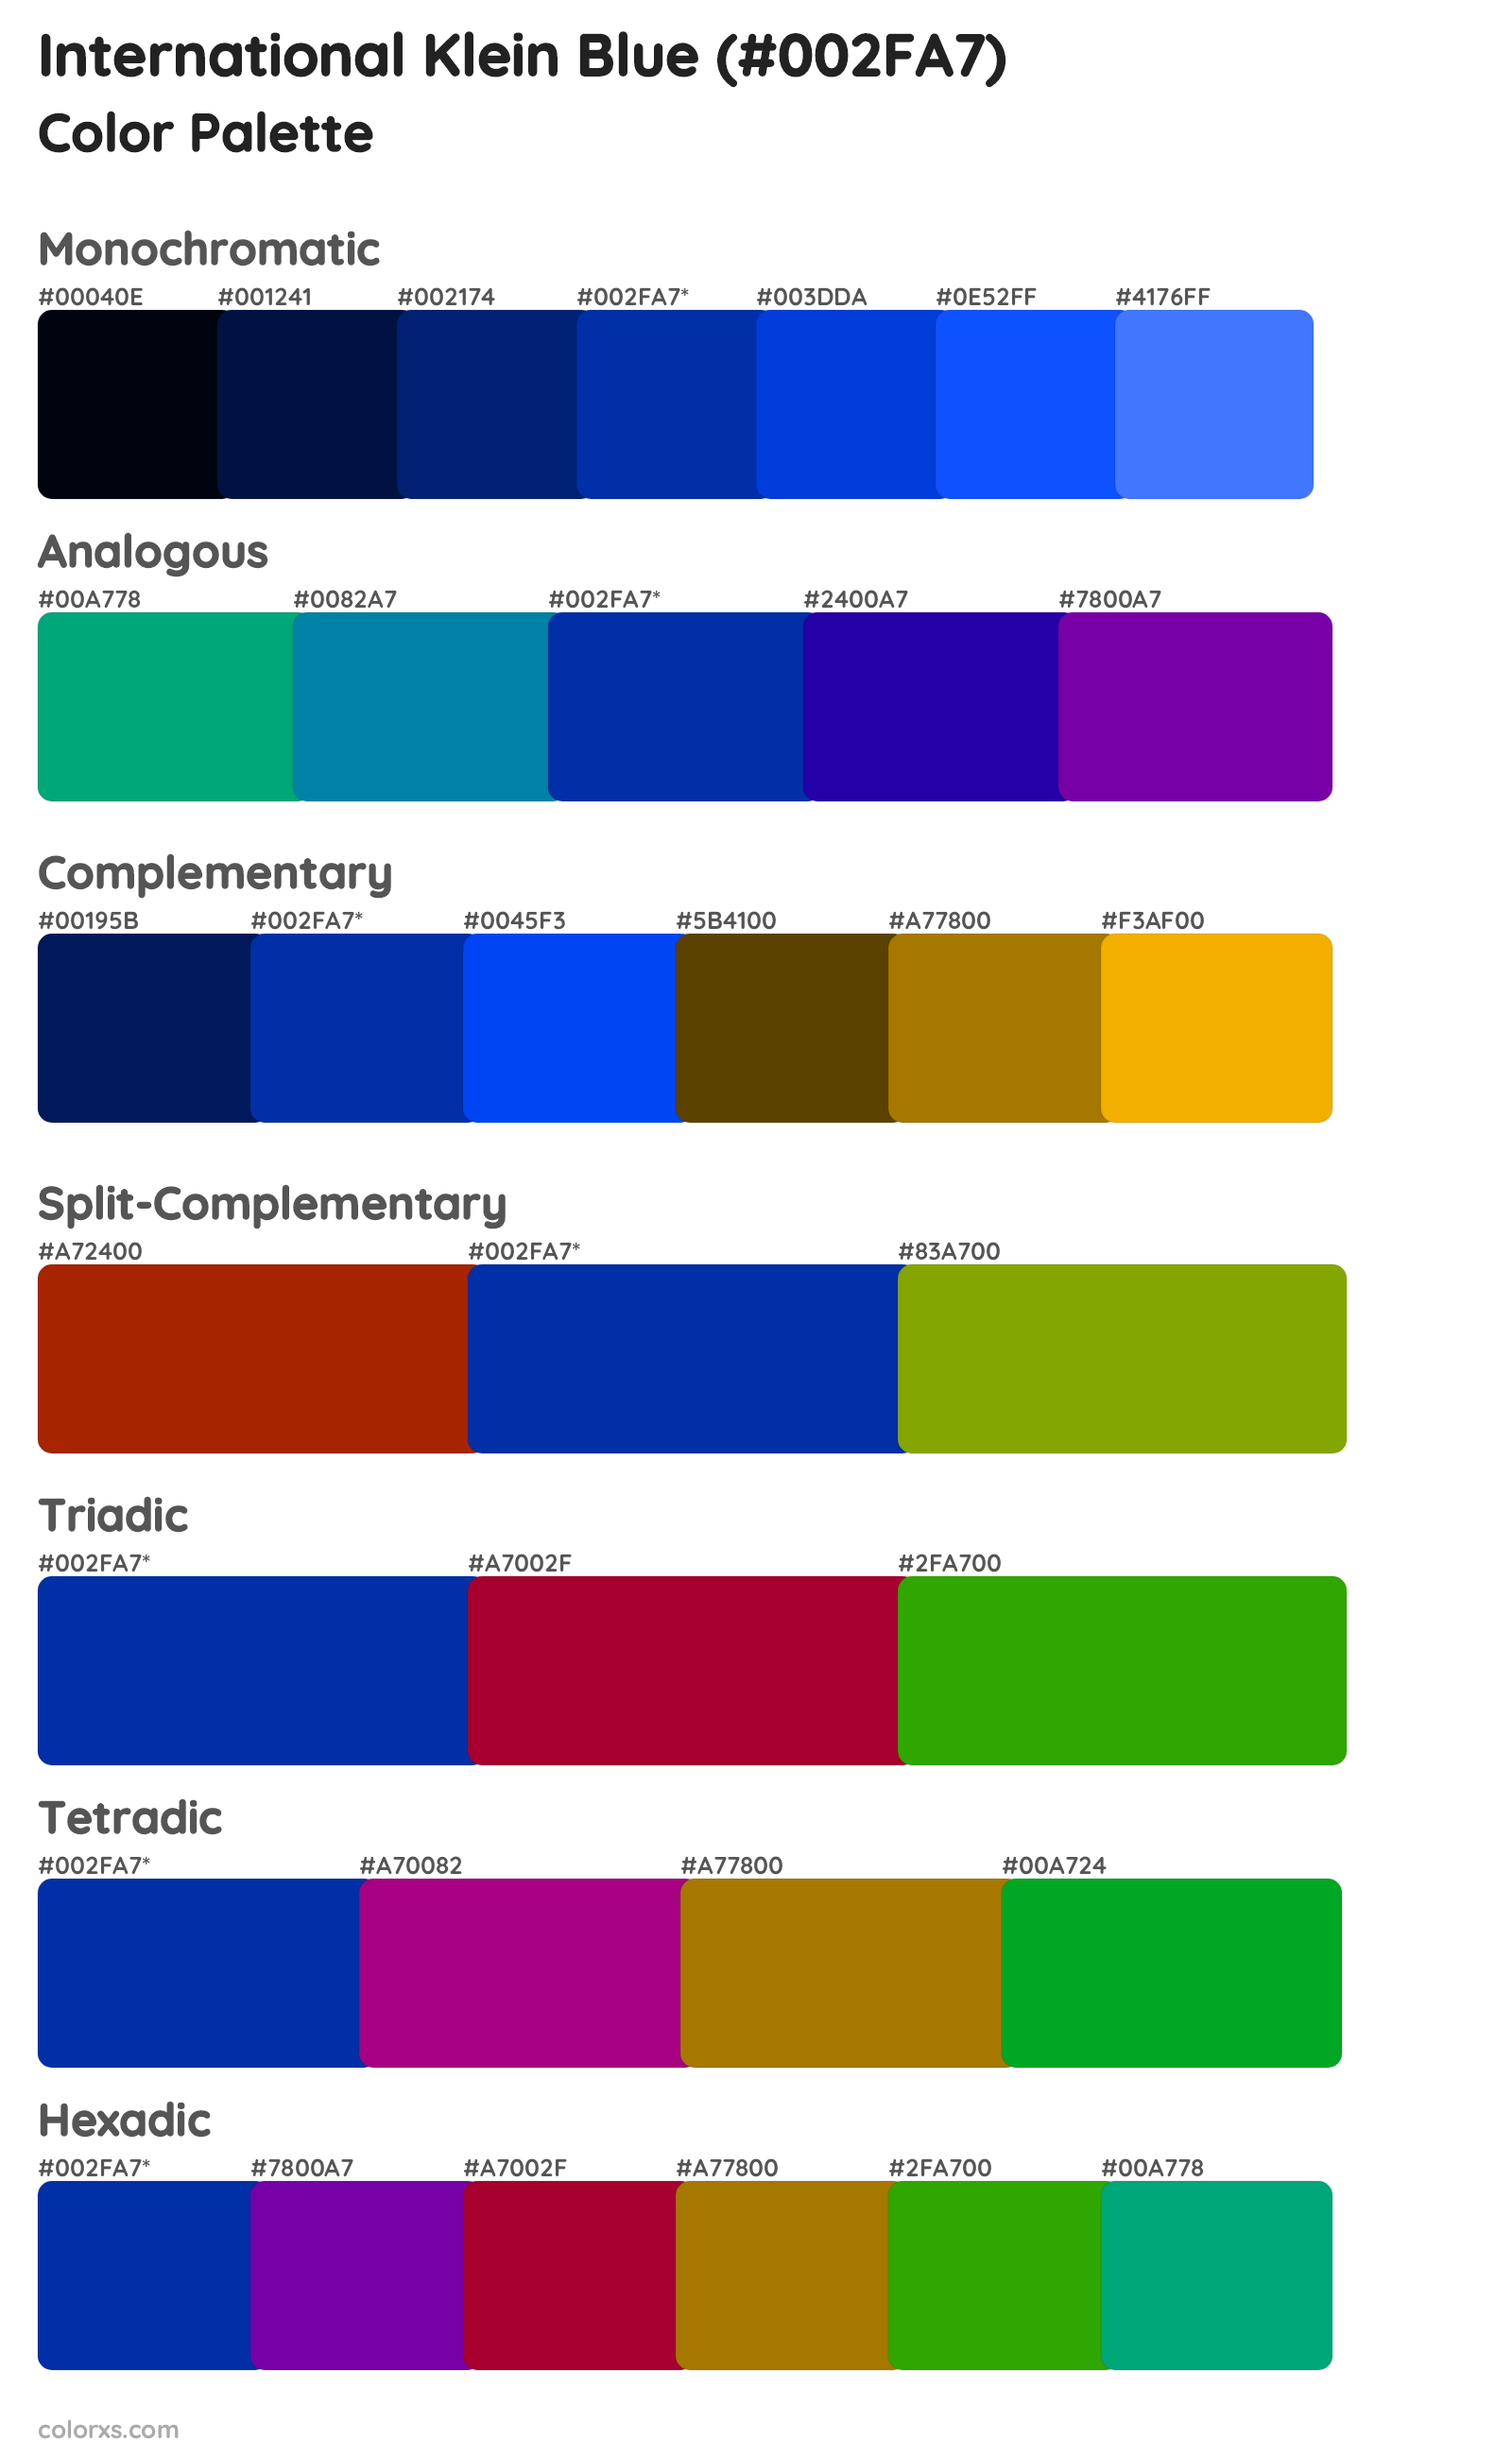 International Klein Blue Color Scheme Palettes